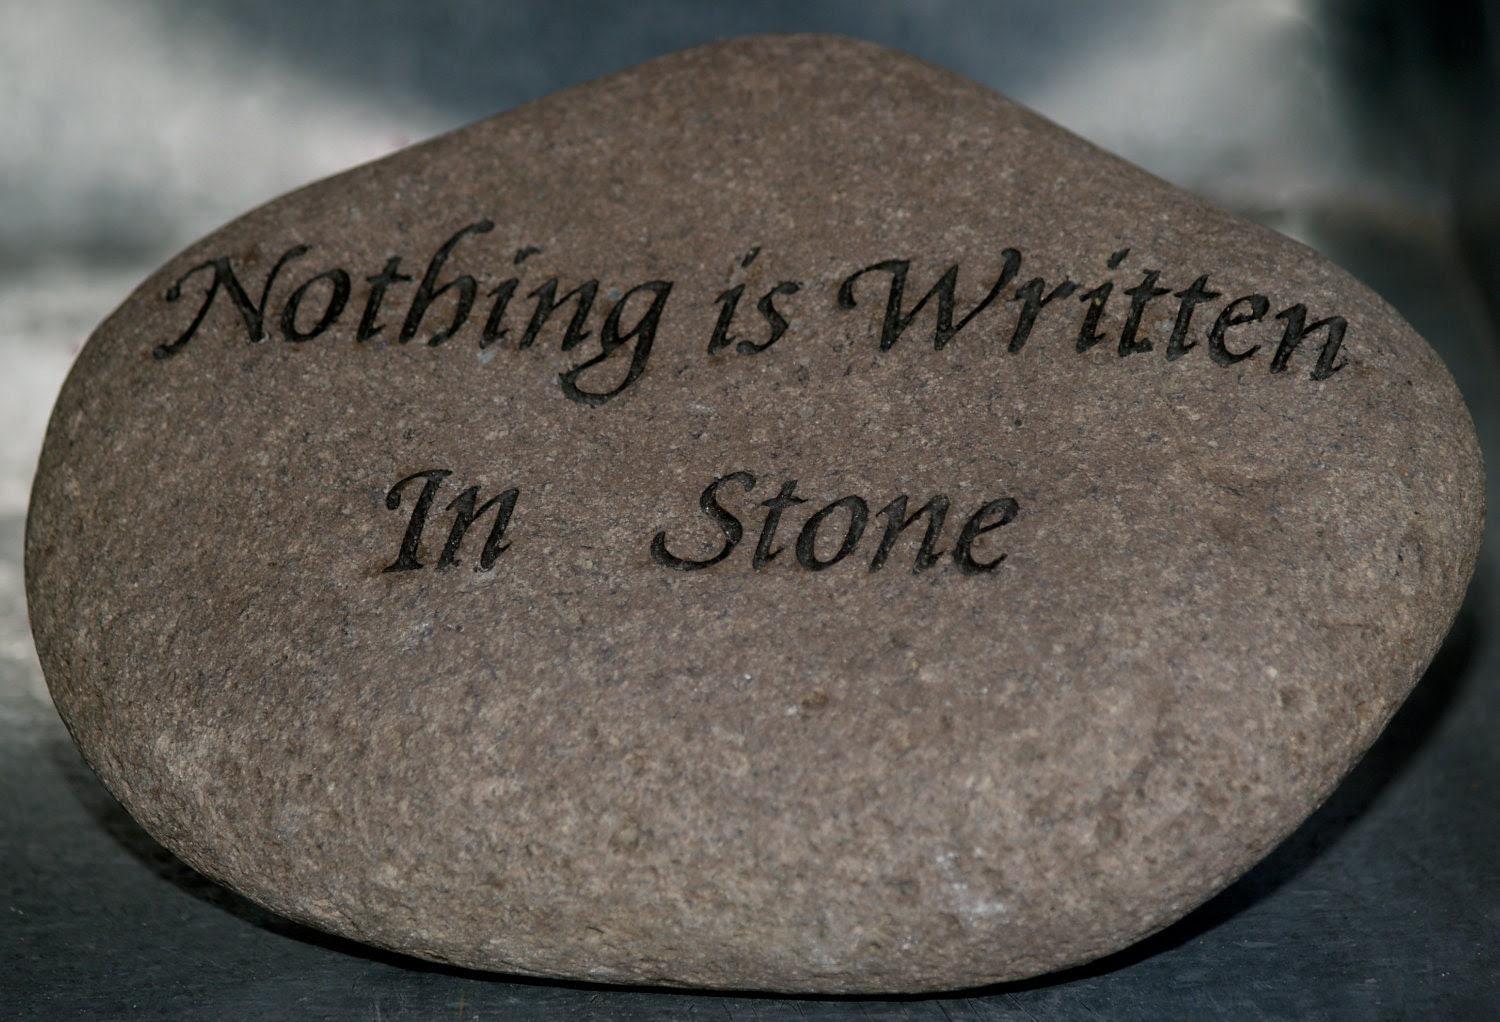 Stone перевести. In Stone. Write on Stone. Nothing is written. Село Нинстинц writing on Stone.